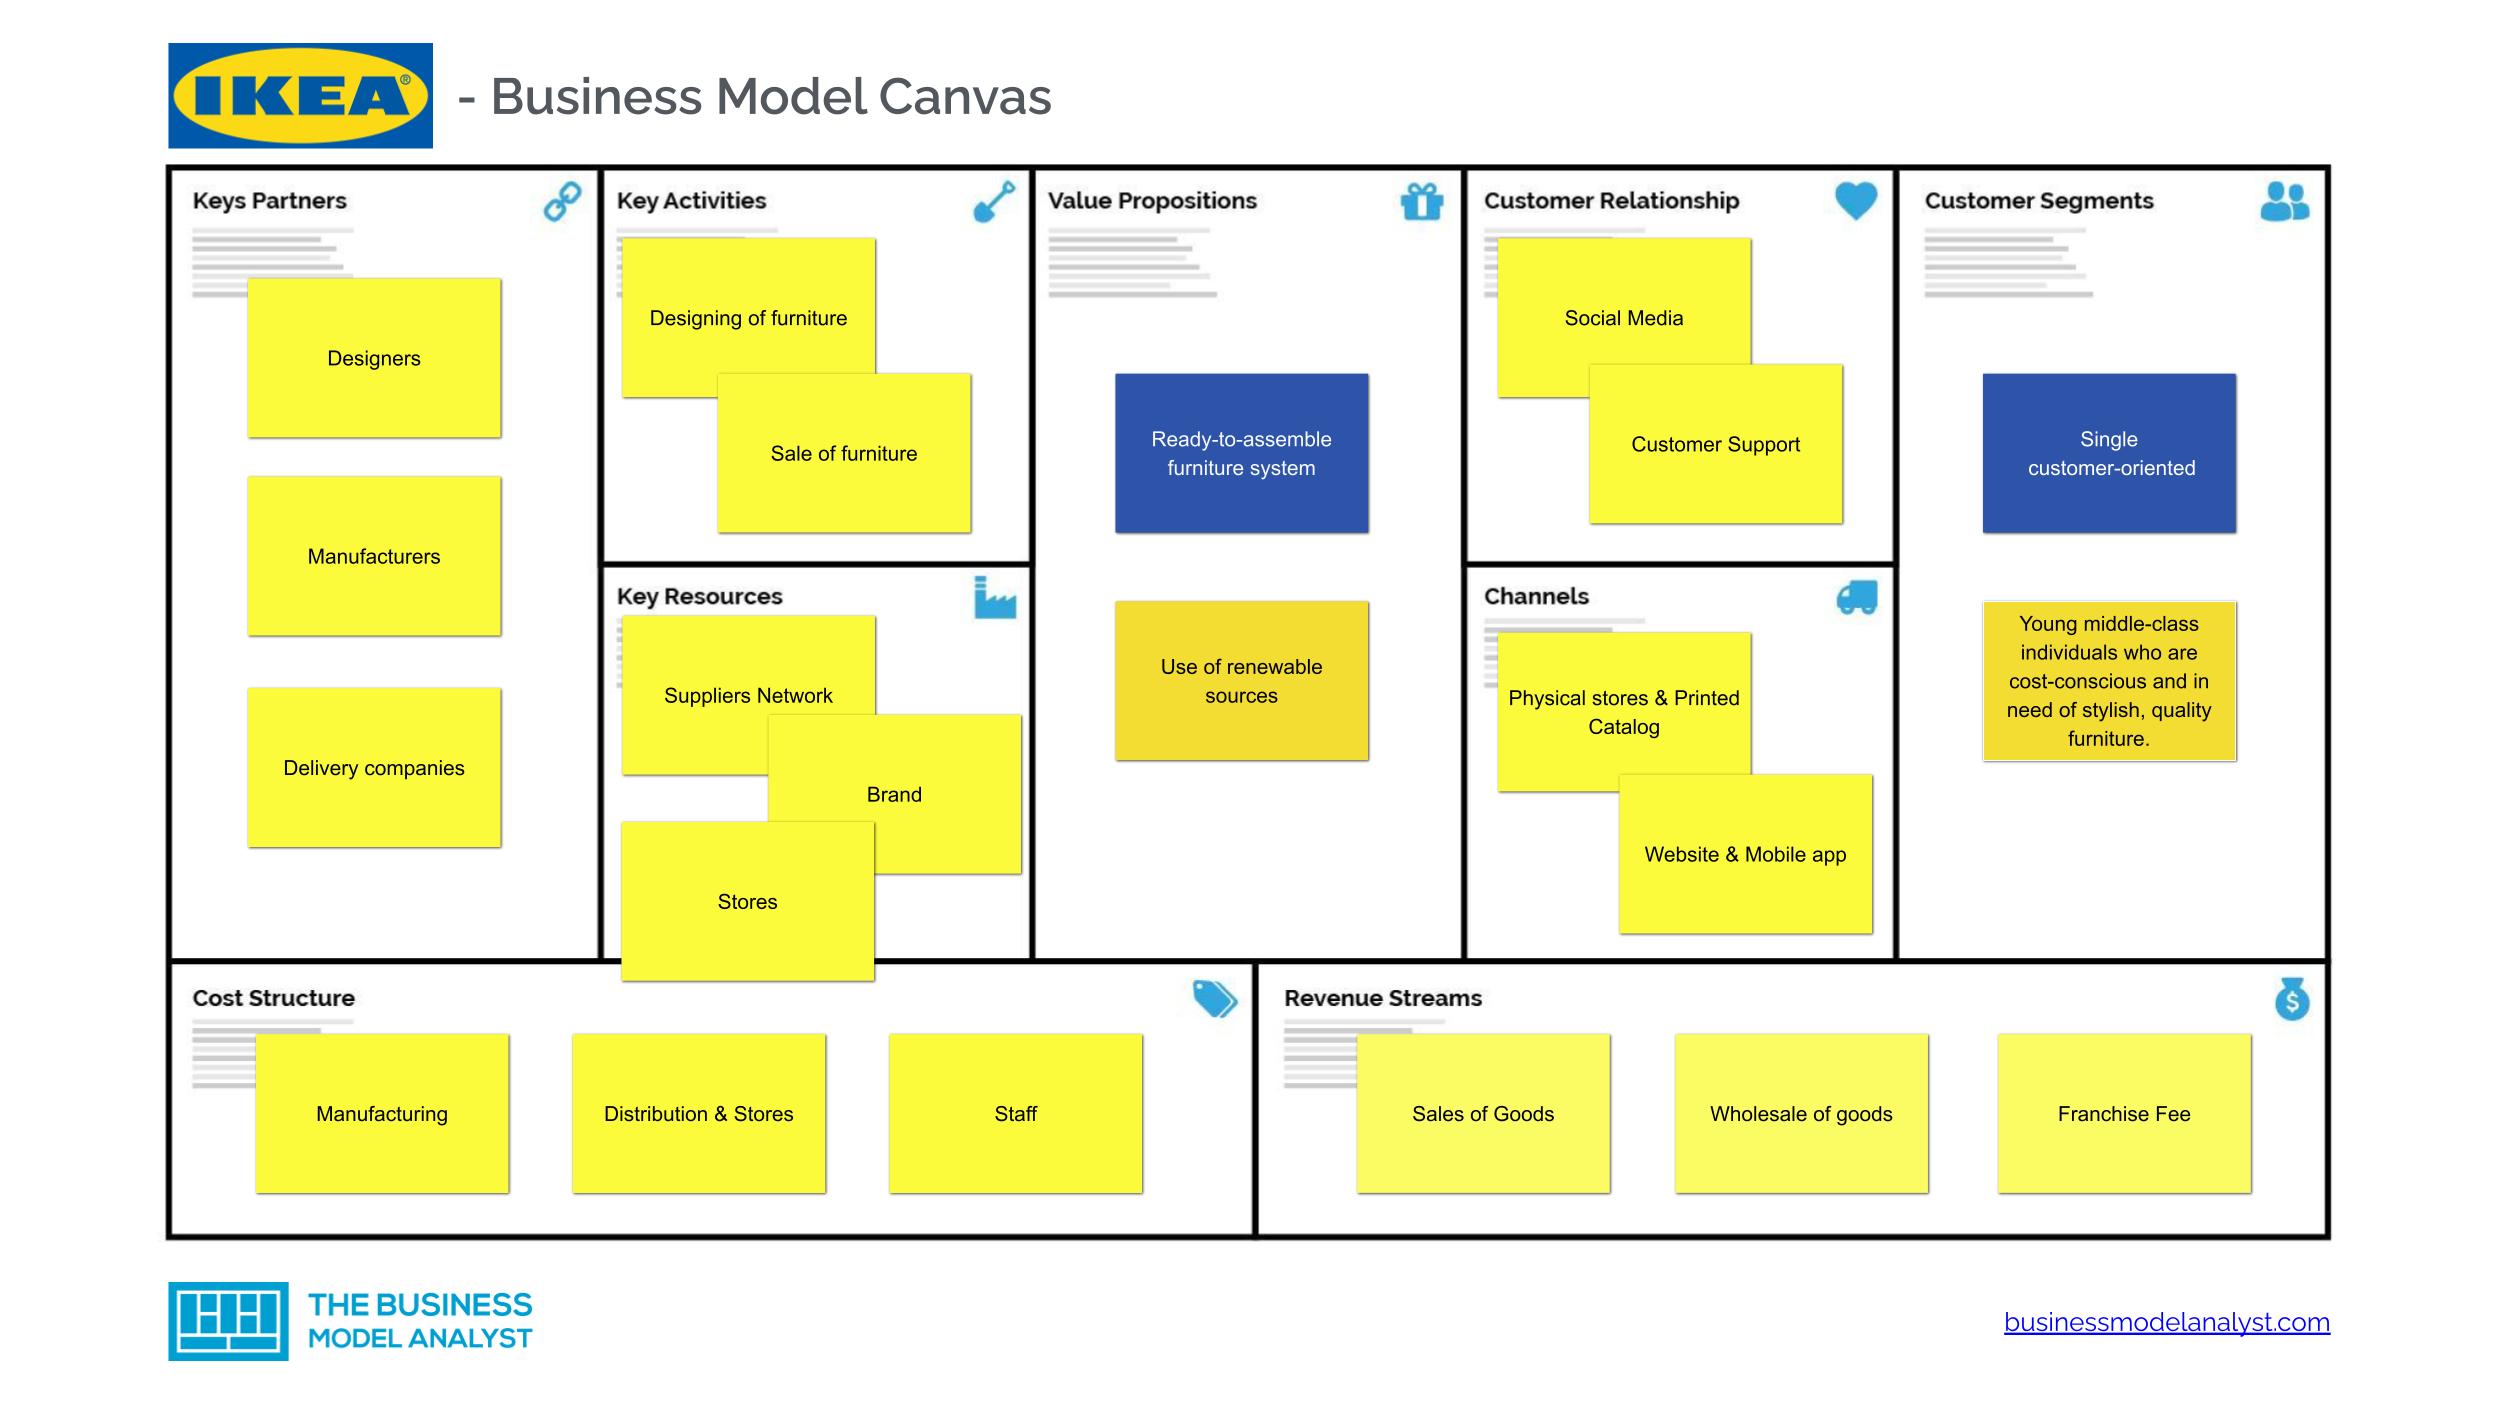 IKEA Business Model Canvas